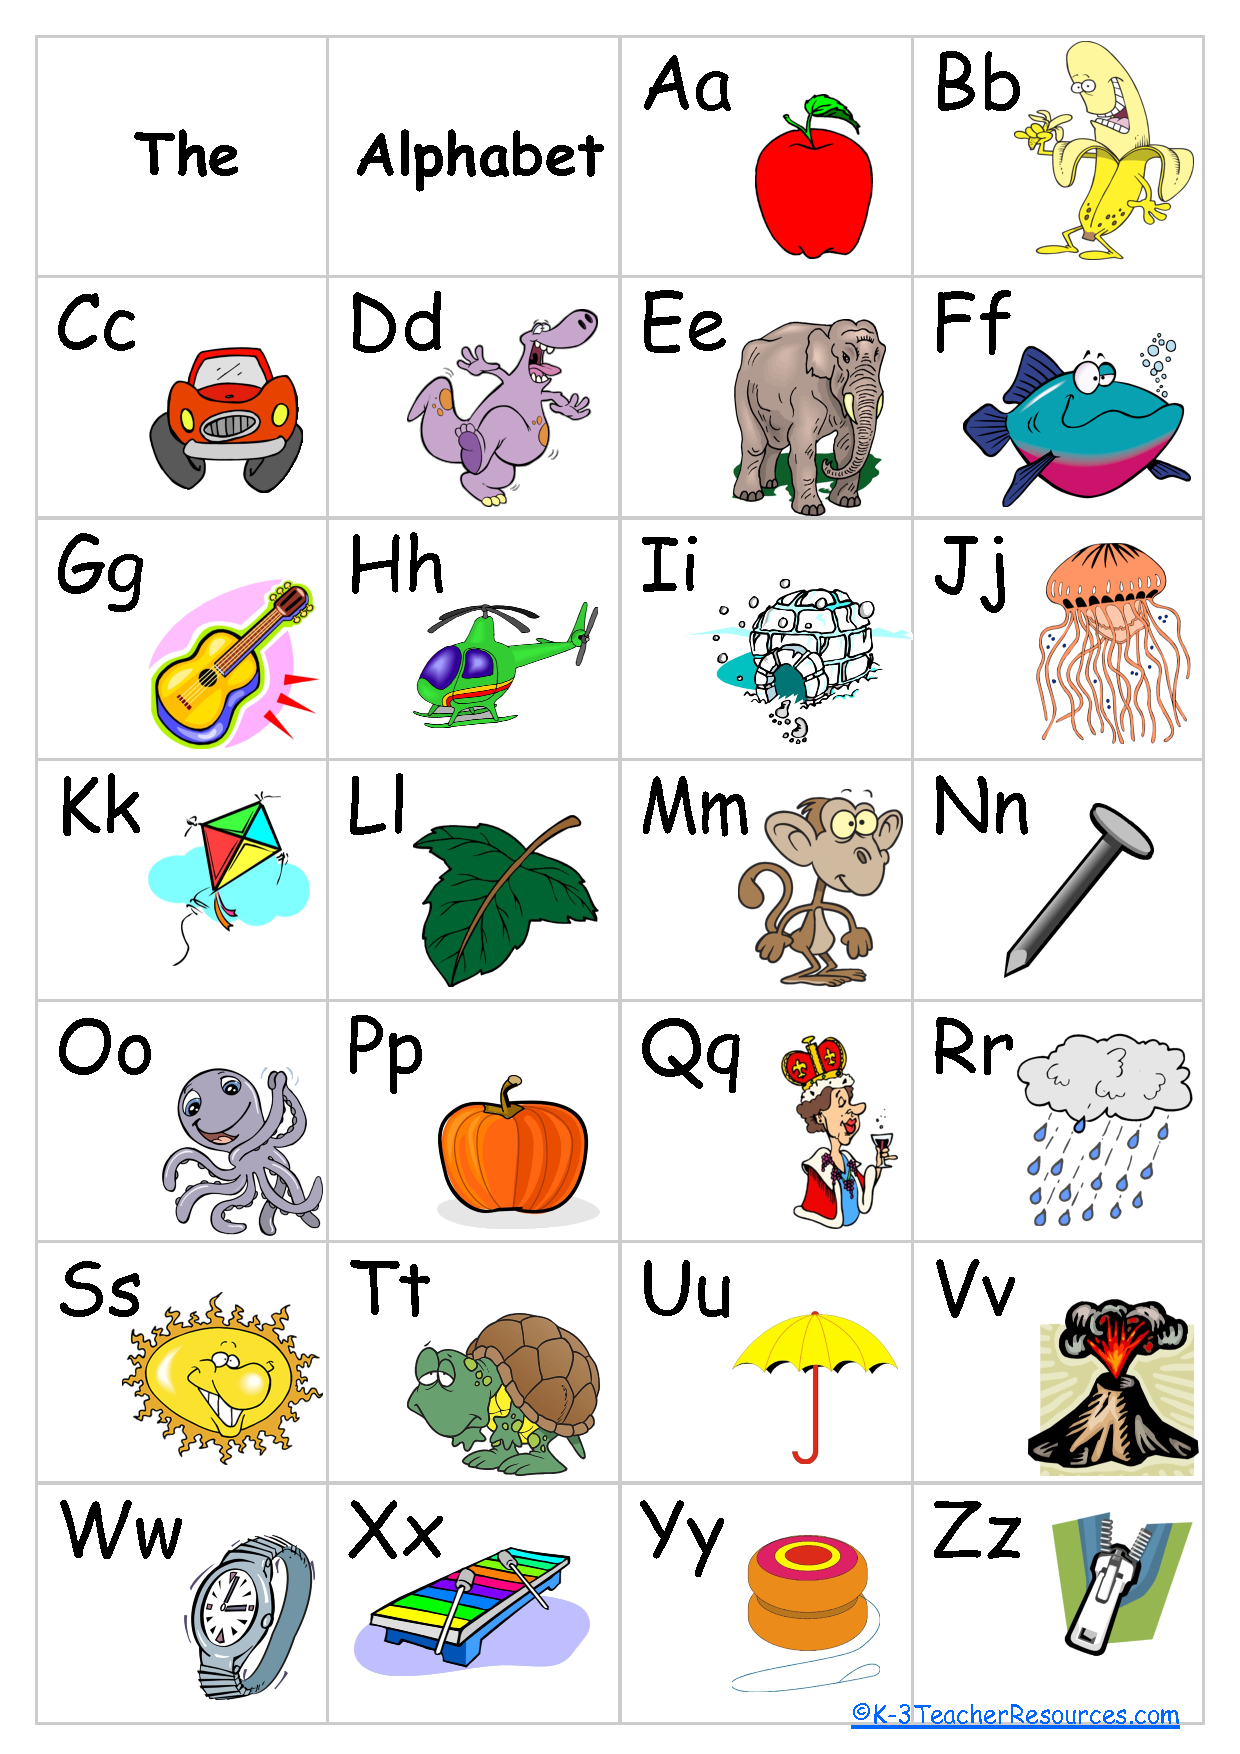 Free+Printable+Alphabet+Chart | Schoolroom Ideas | Pinterest - Free Printable Alphabet Chart